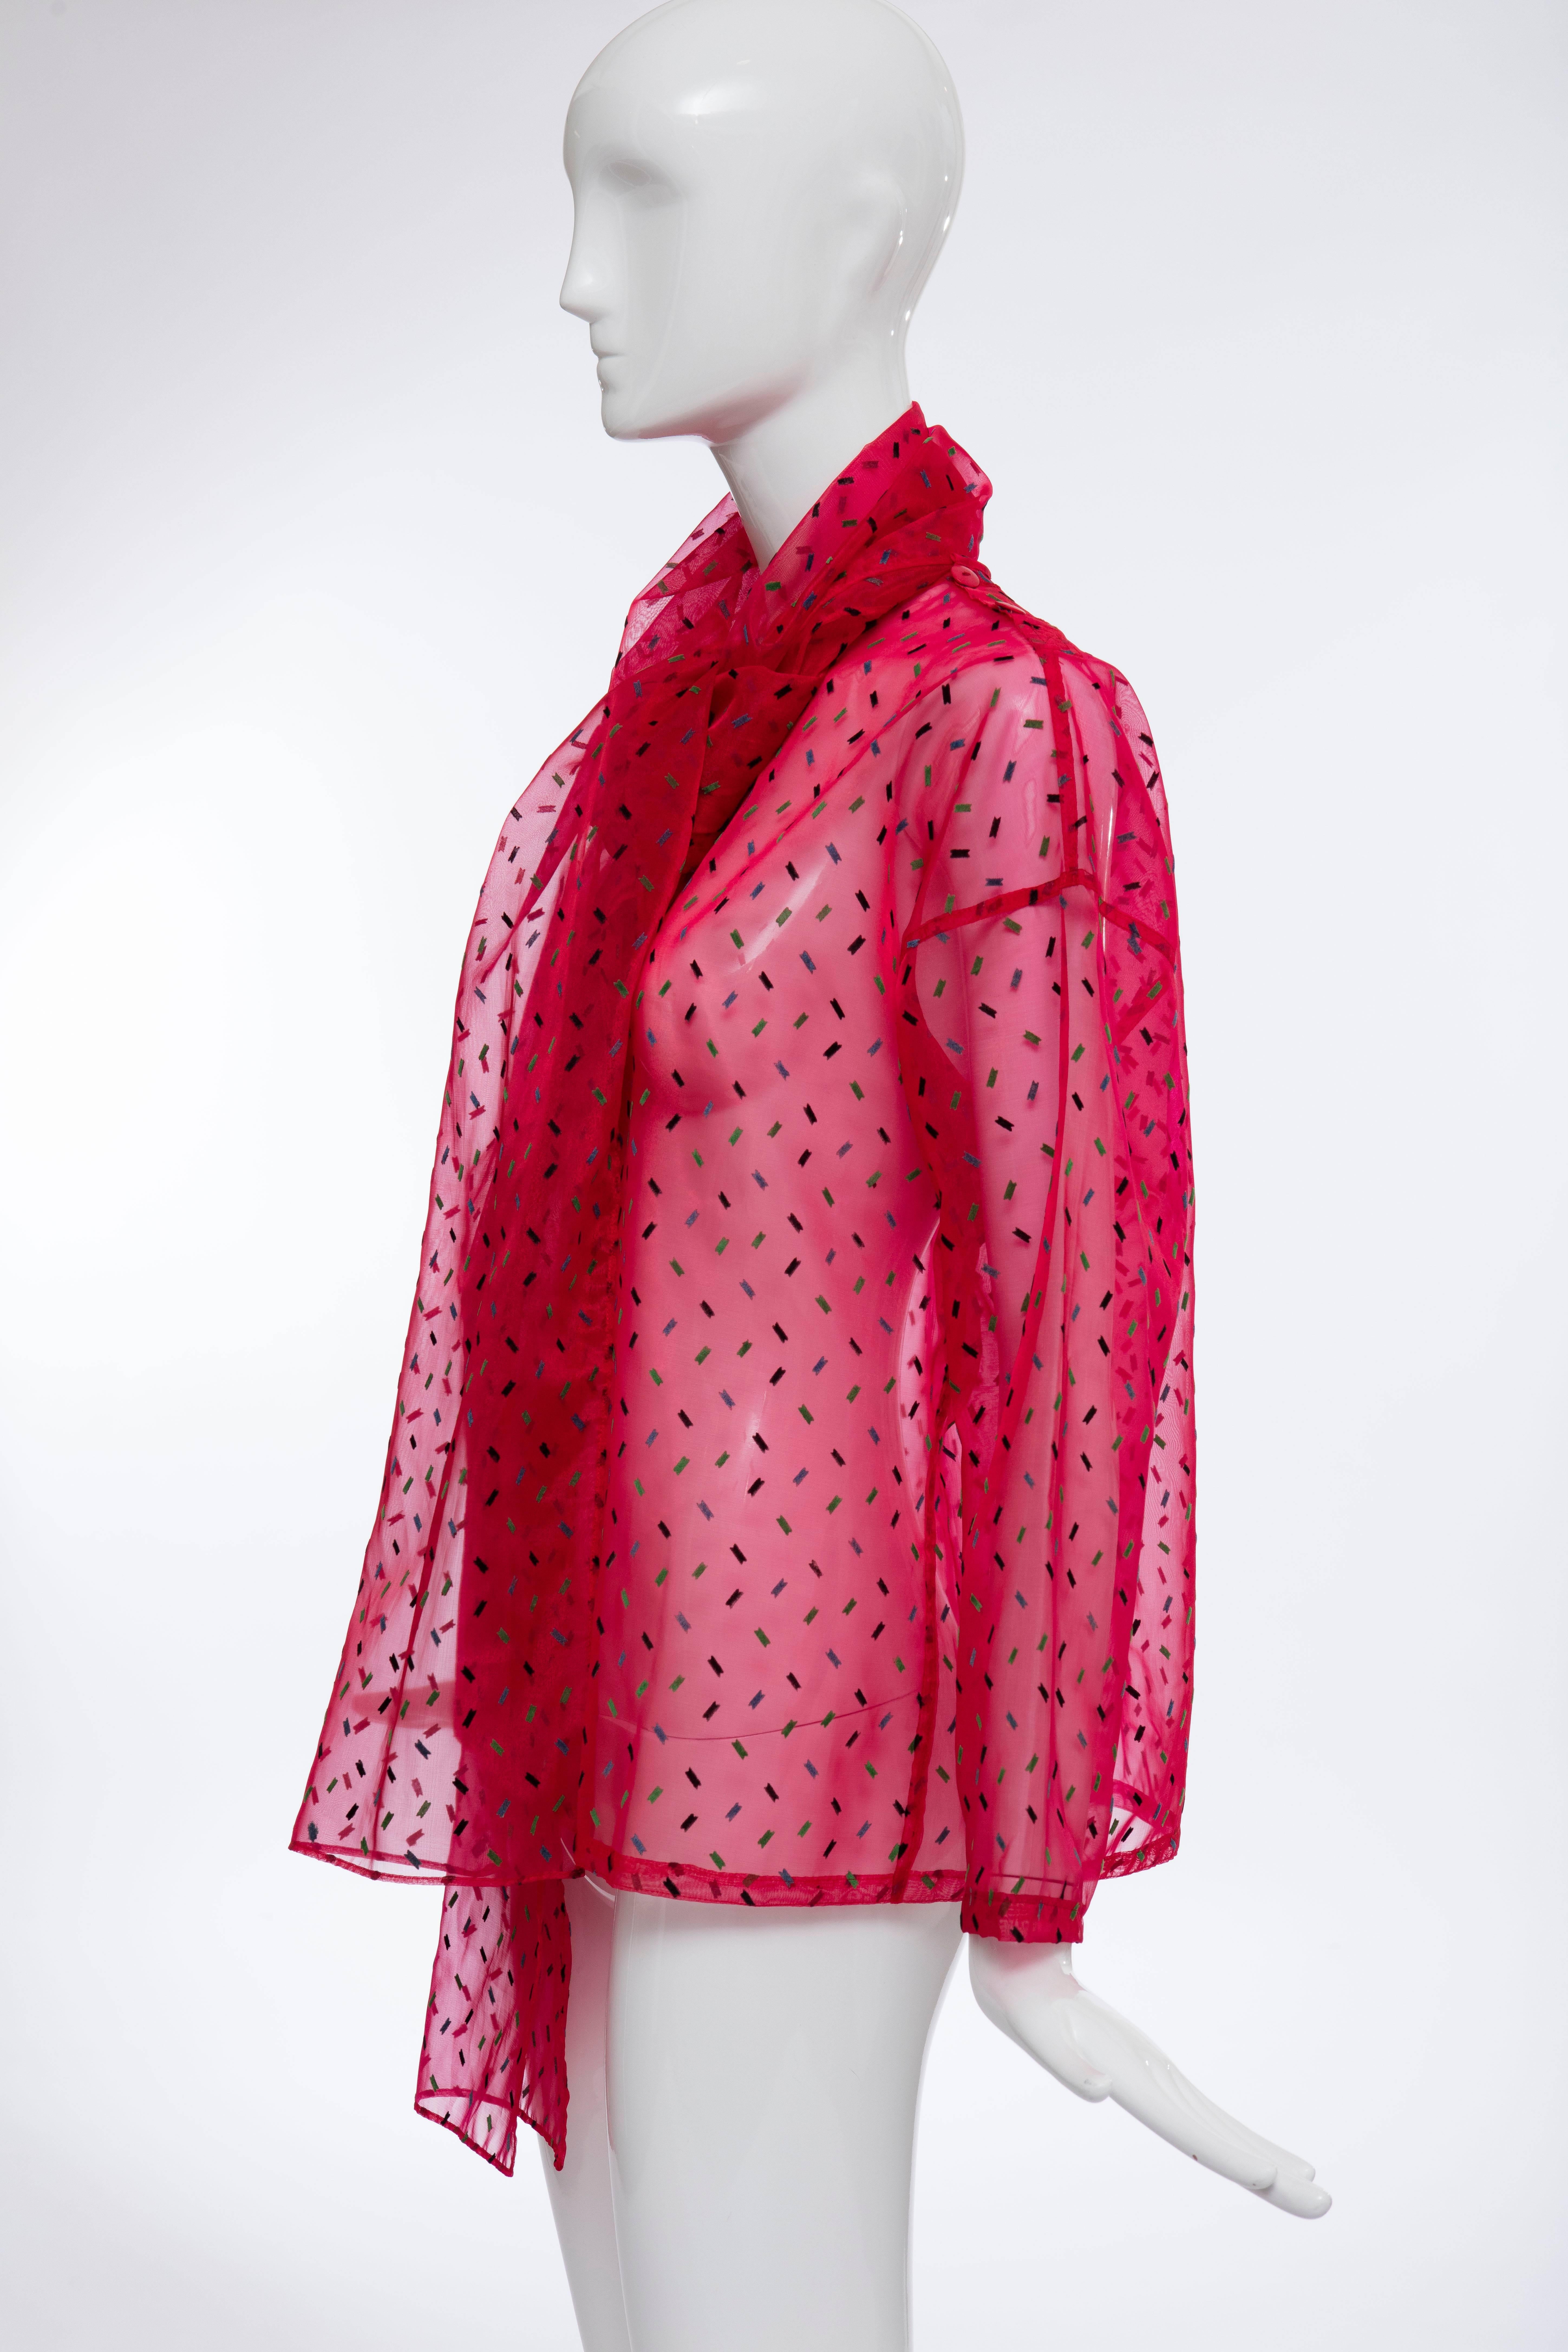 Kansai Yamamoto Red Sheer Silk Nylon Velvet Flecks Top & Scarf, Circa 1980's For Sale 5